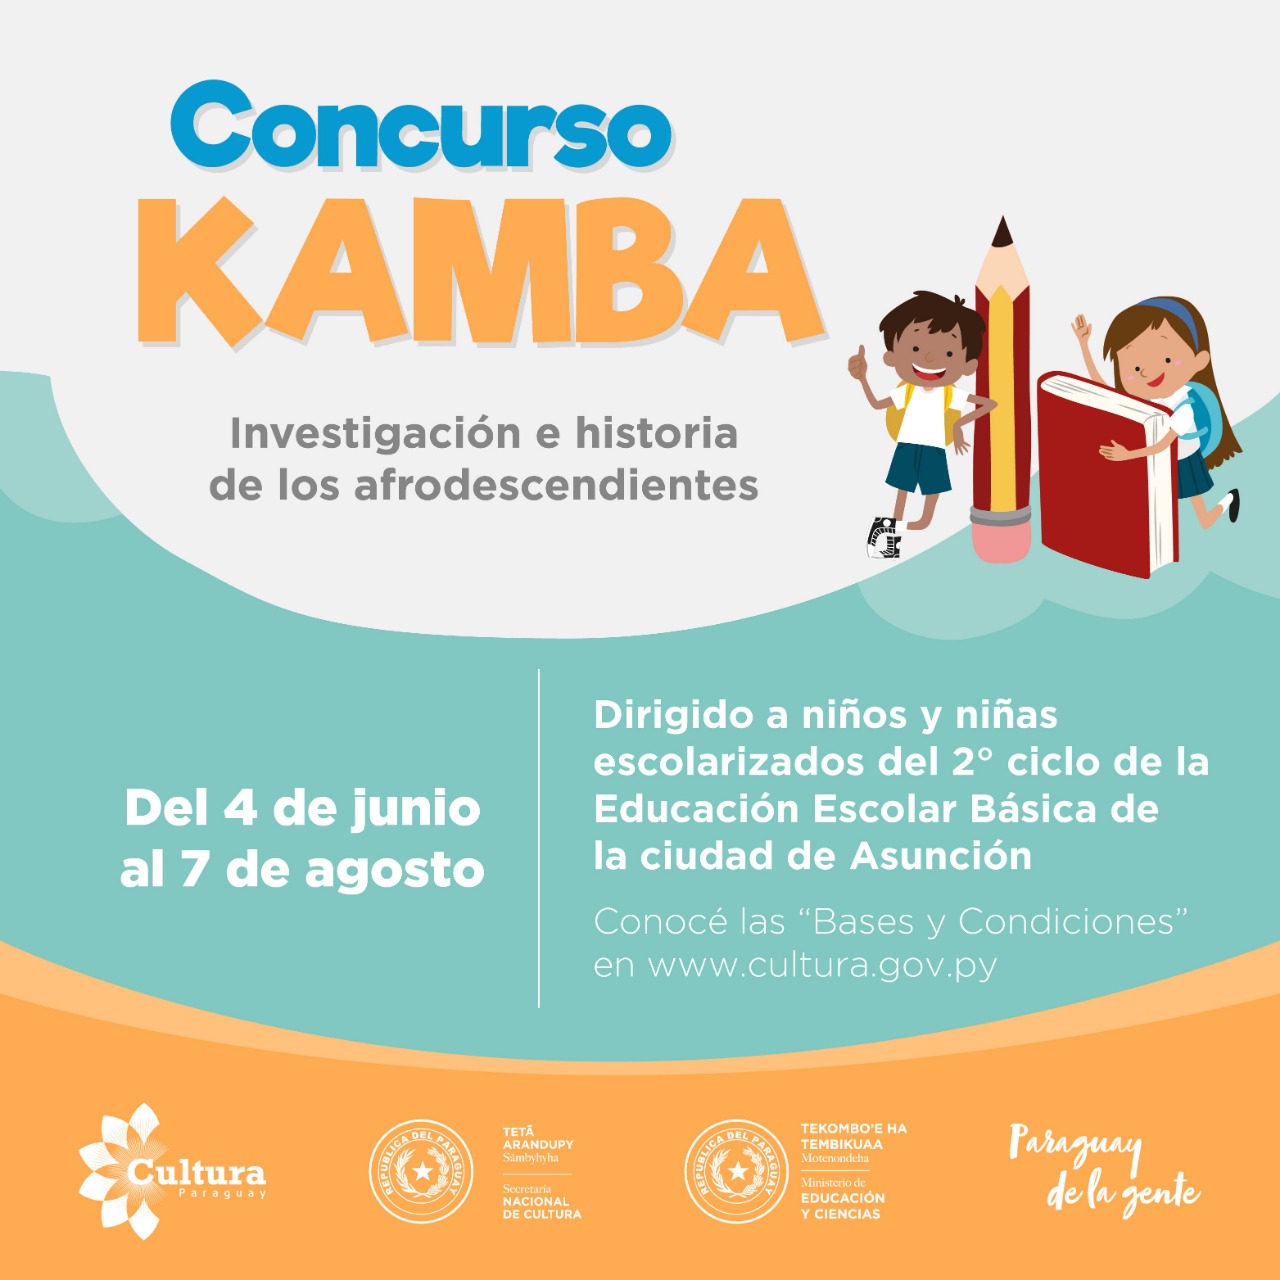 Lanzarán concurso “Kamba. Investigación e historia de los afrodescendientes en Paraguay” imagen